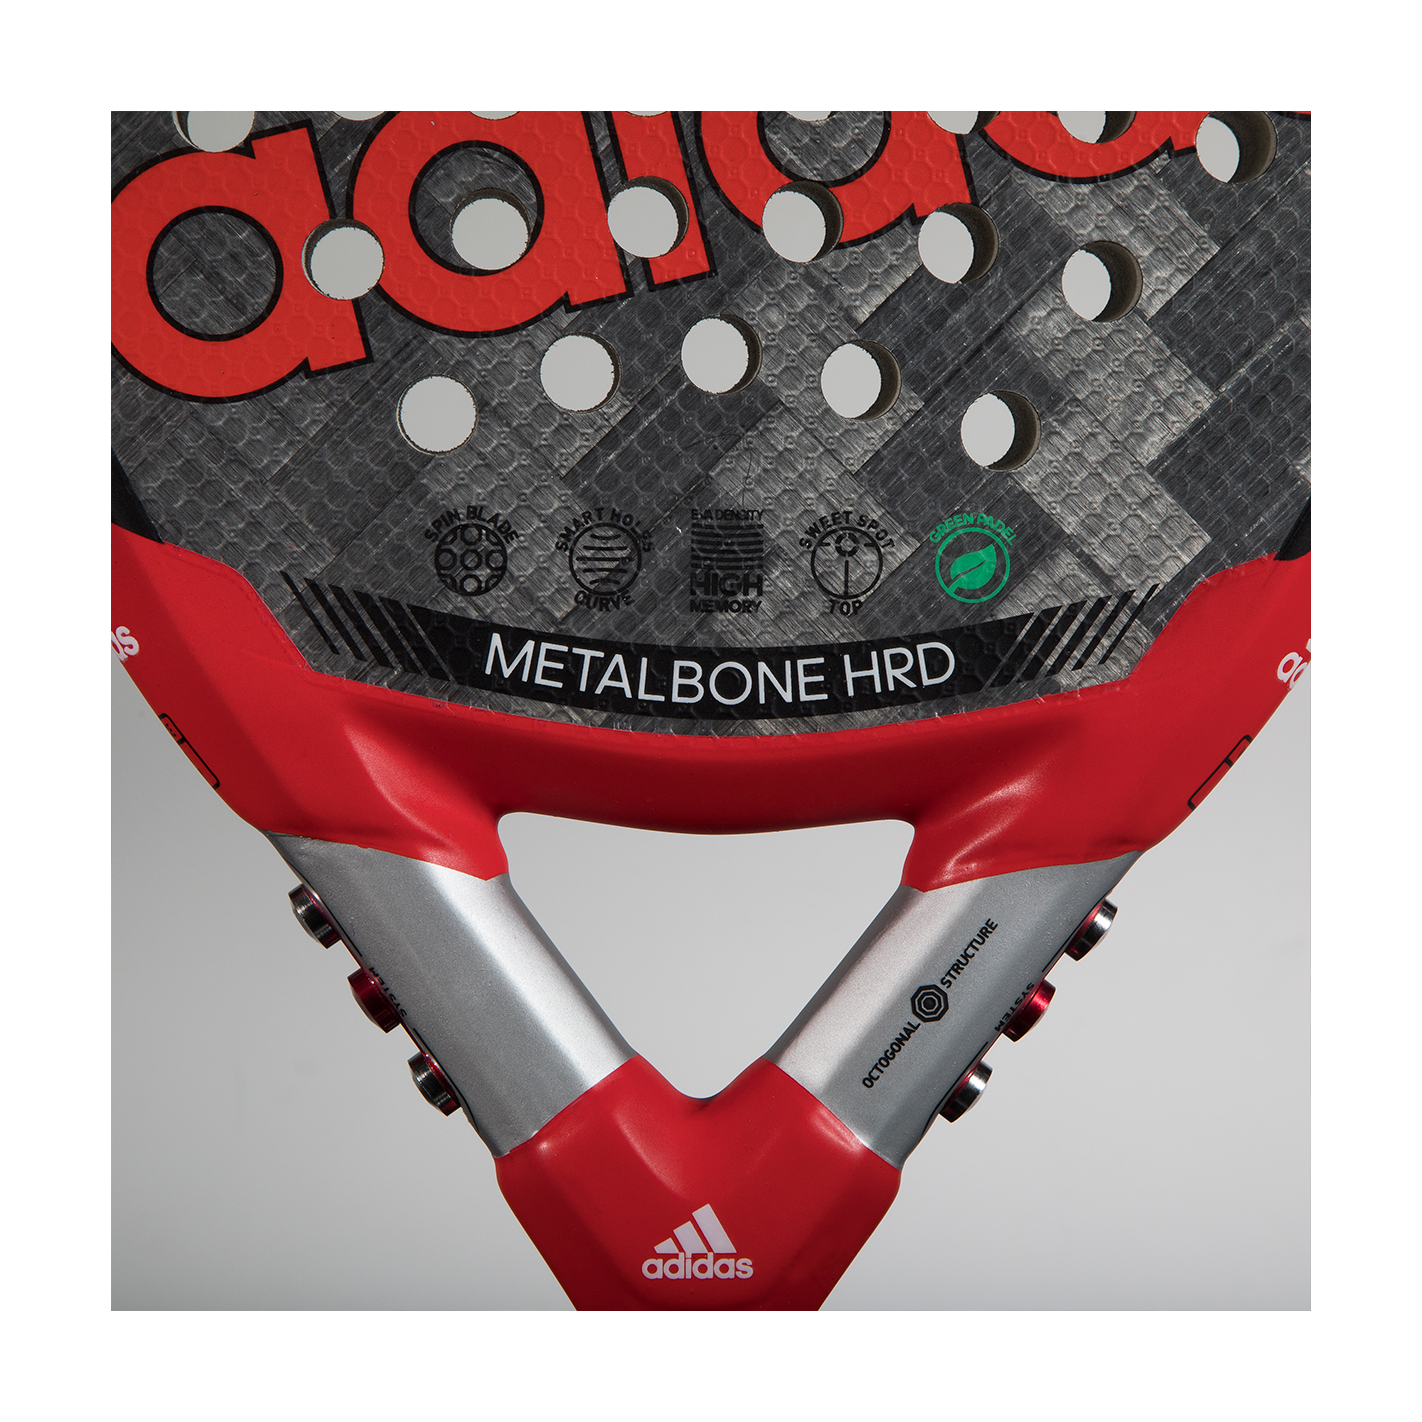 Adidas Metalbone HRD 3.1 Padelbat - Padellife.dk